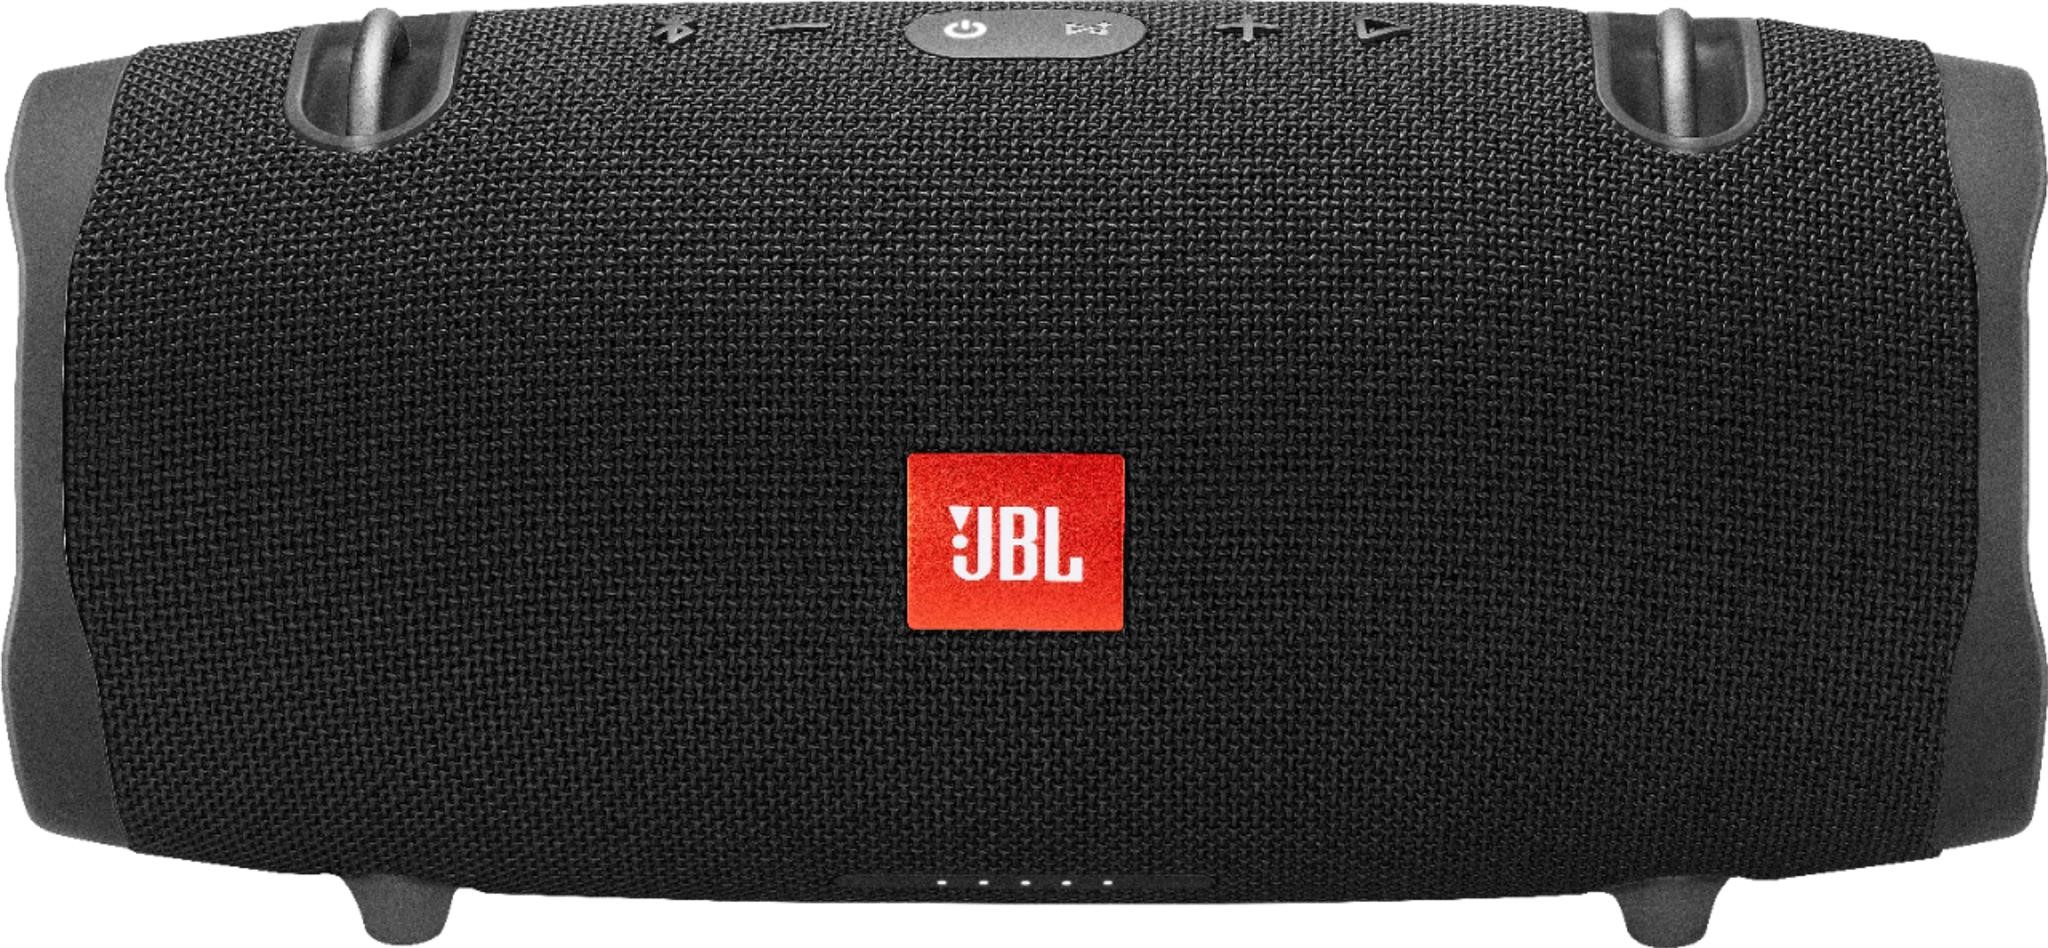 $200  JBL - Xtreme 2 Portable Bluetooth Speaker -